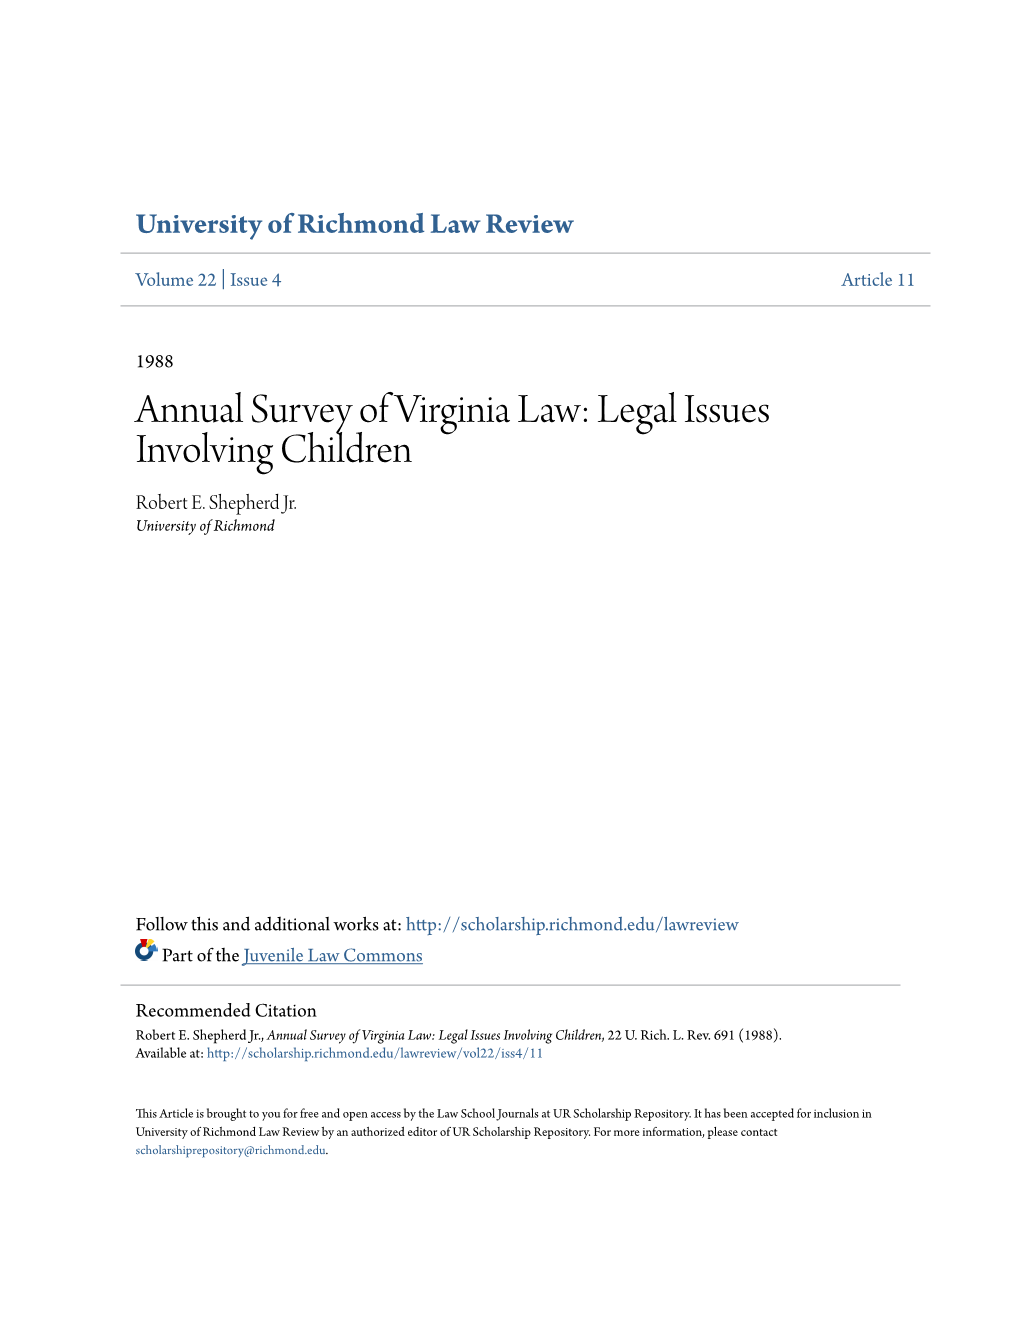 Annual Survey of Virginia Law: Legal Issues Involving Children Robert E